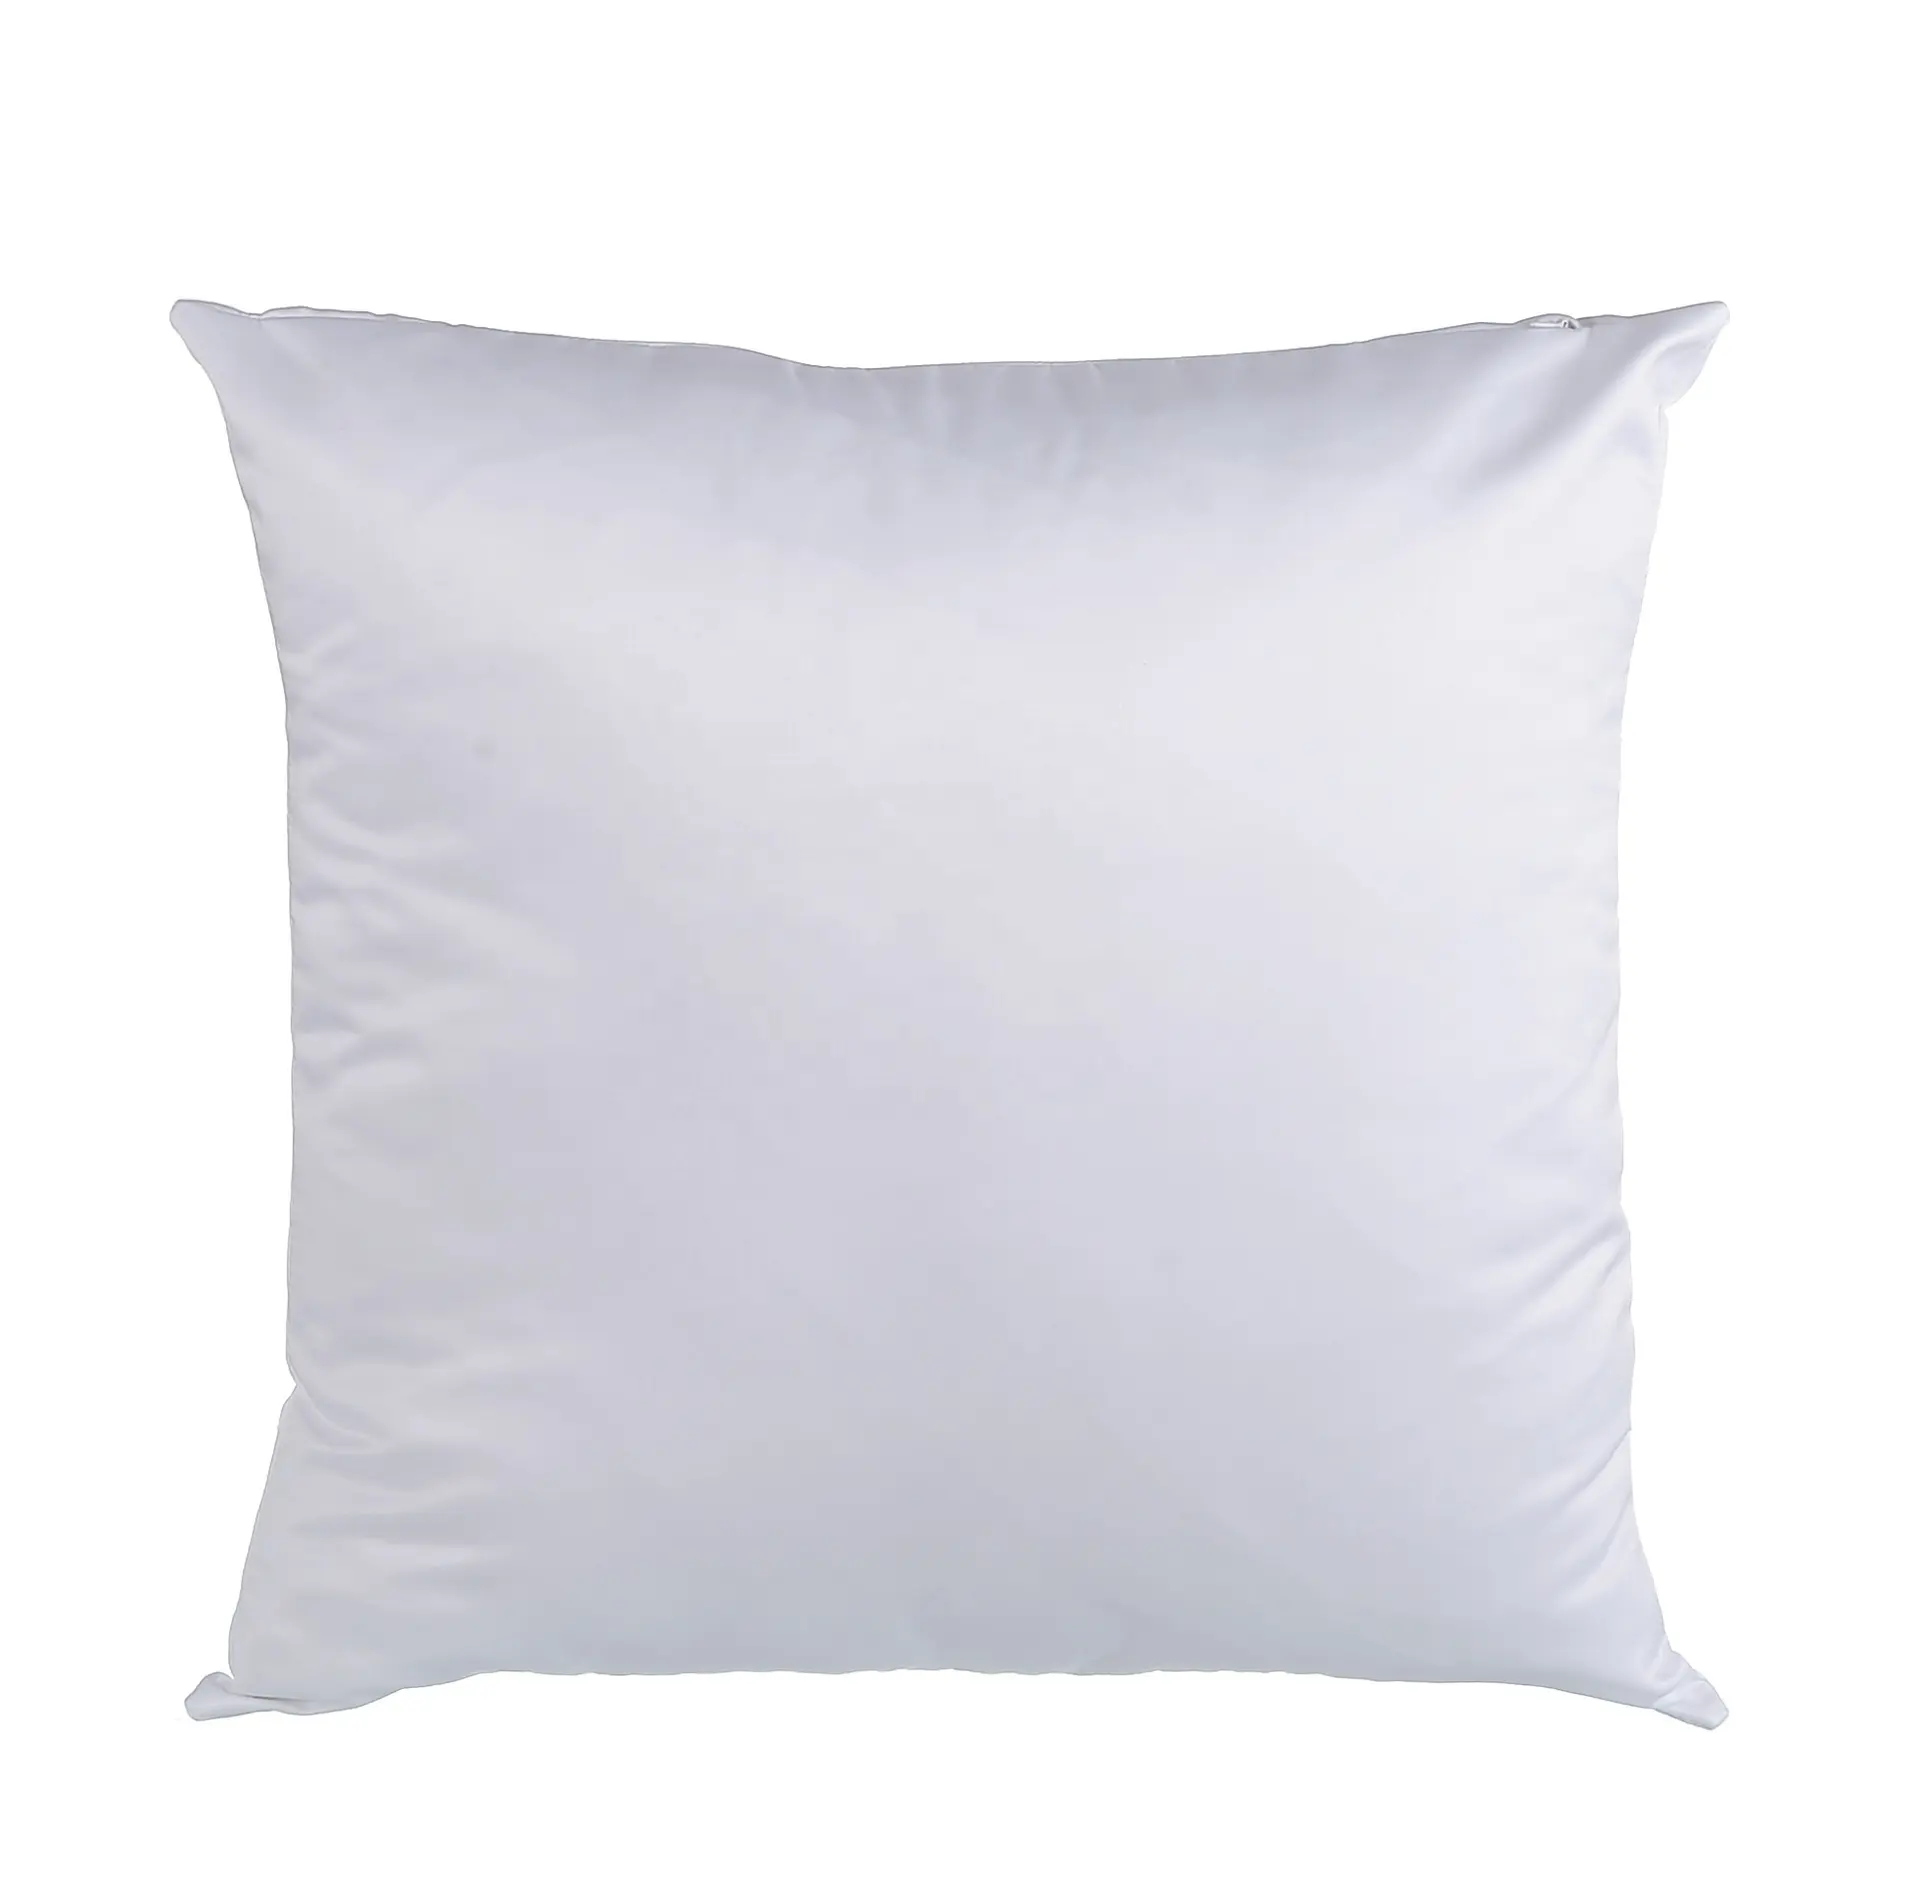 Rubysub P-03 Hot Selling 40cm Custom Satin Sublimation Printed Pillows Covers Full White Satin pillow case